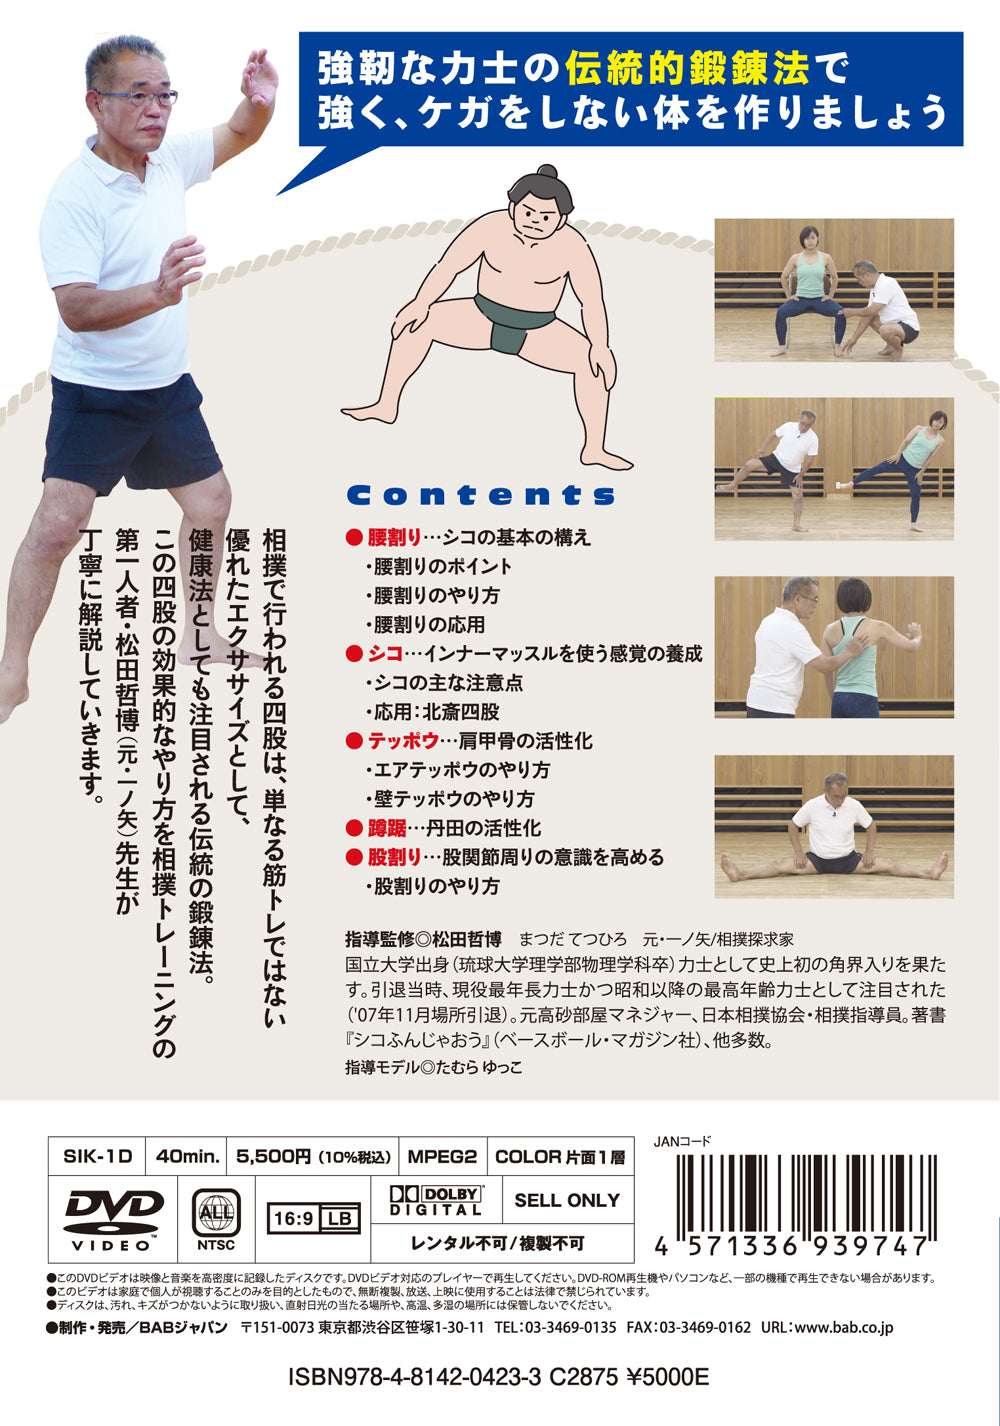 Shiko Sumo Traditional Training DVD by Tetsuhiro Matsuda - Budovideos Inc